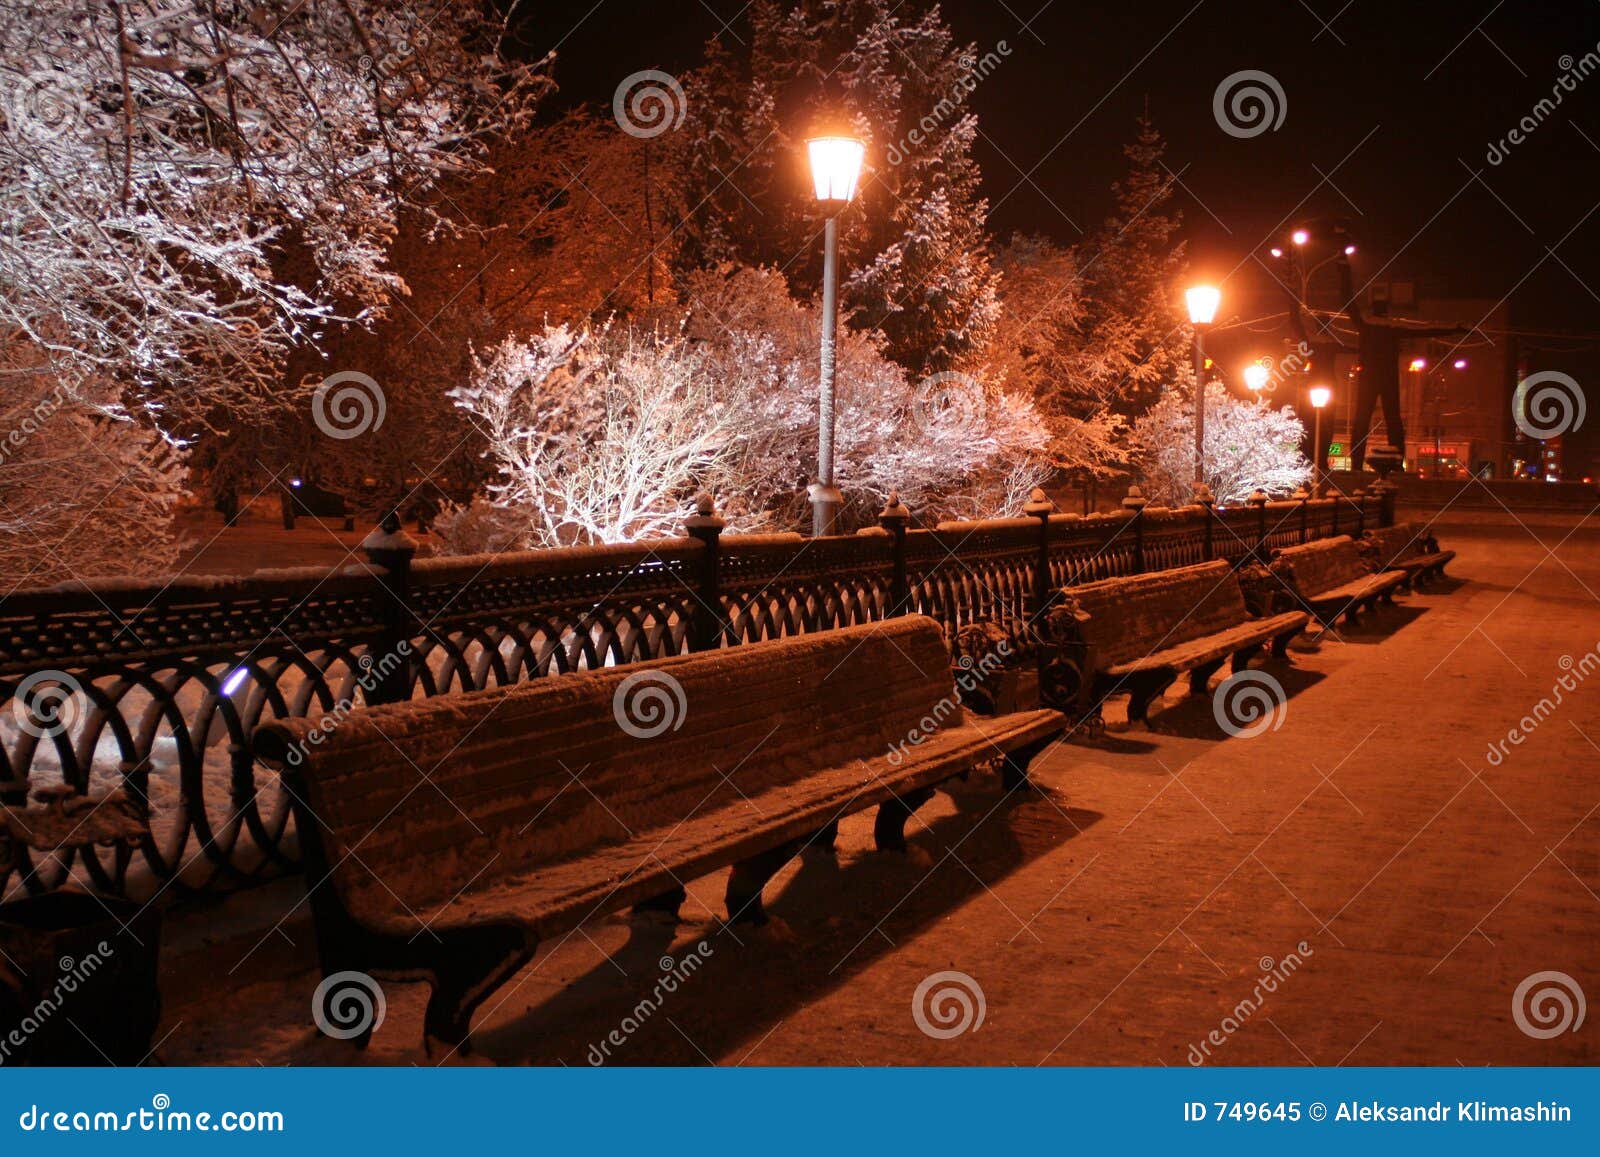 Illumination of Novosibirsk Stock Image - of winter, 749645